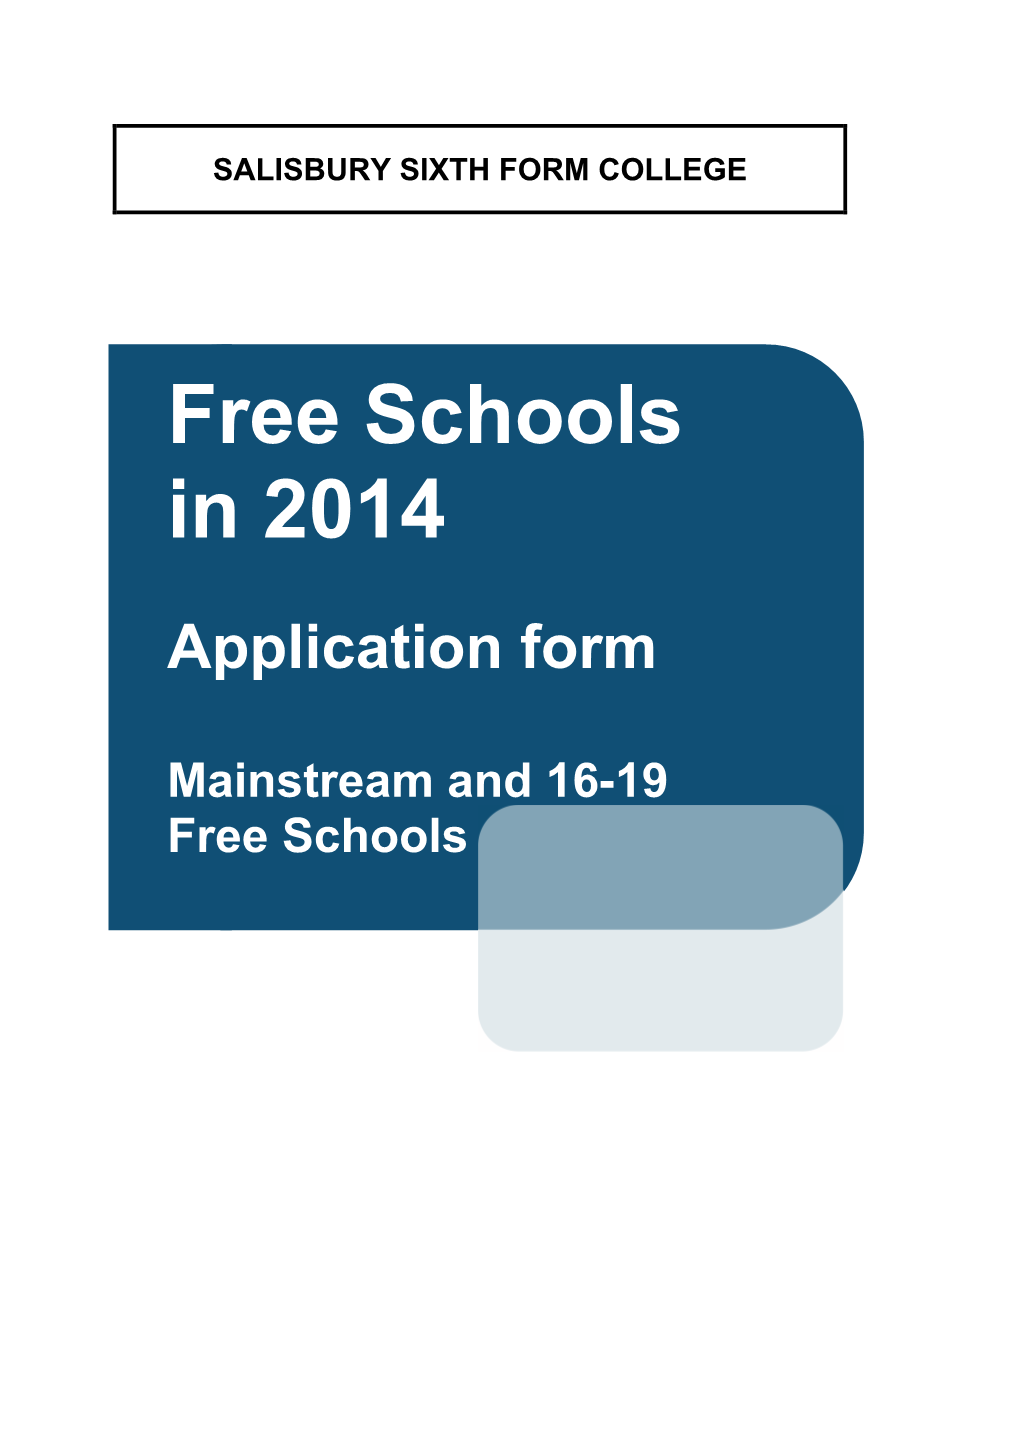 Free Schools in 2014